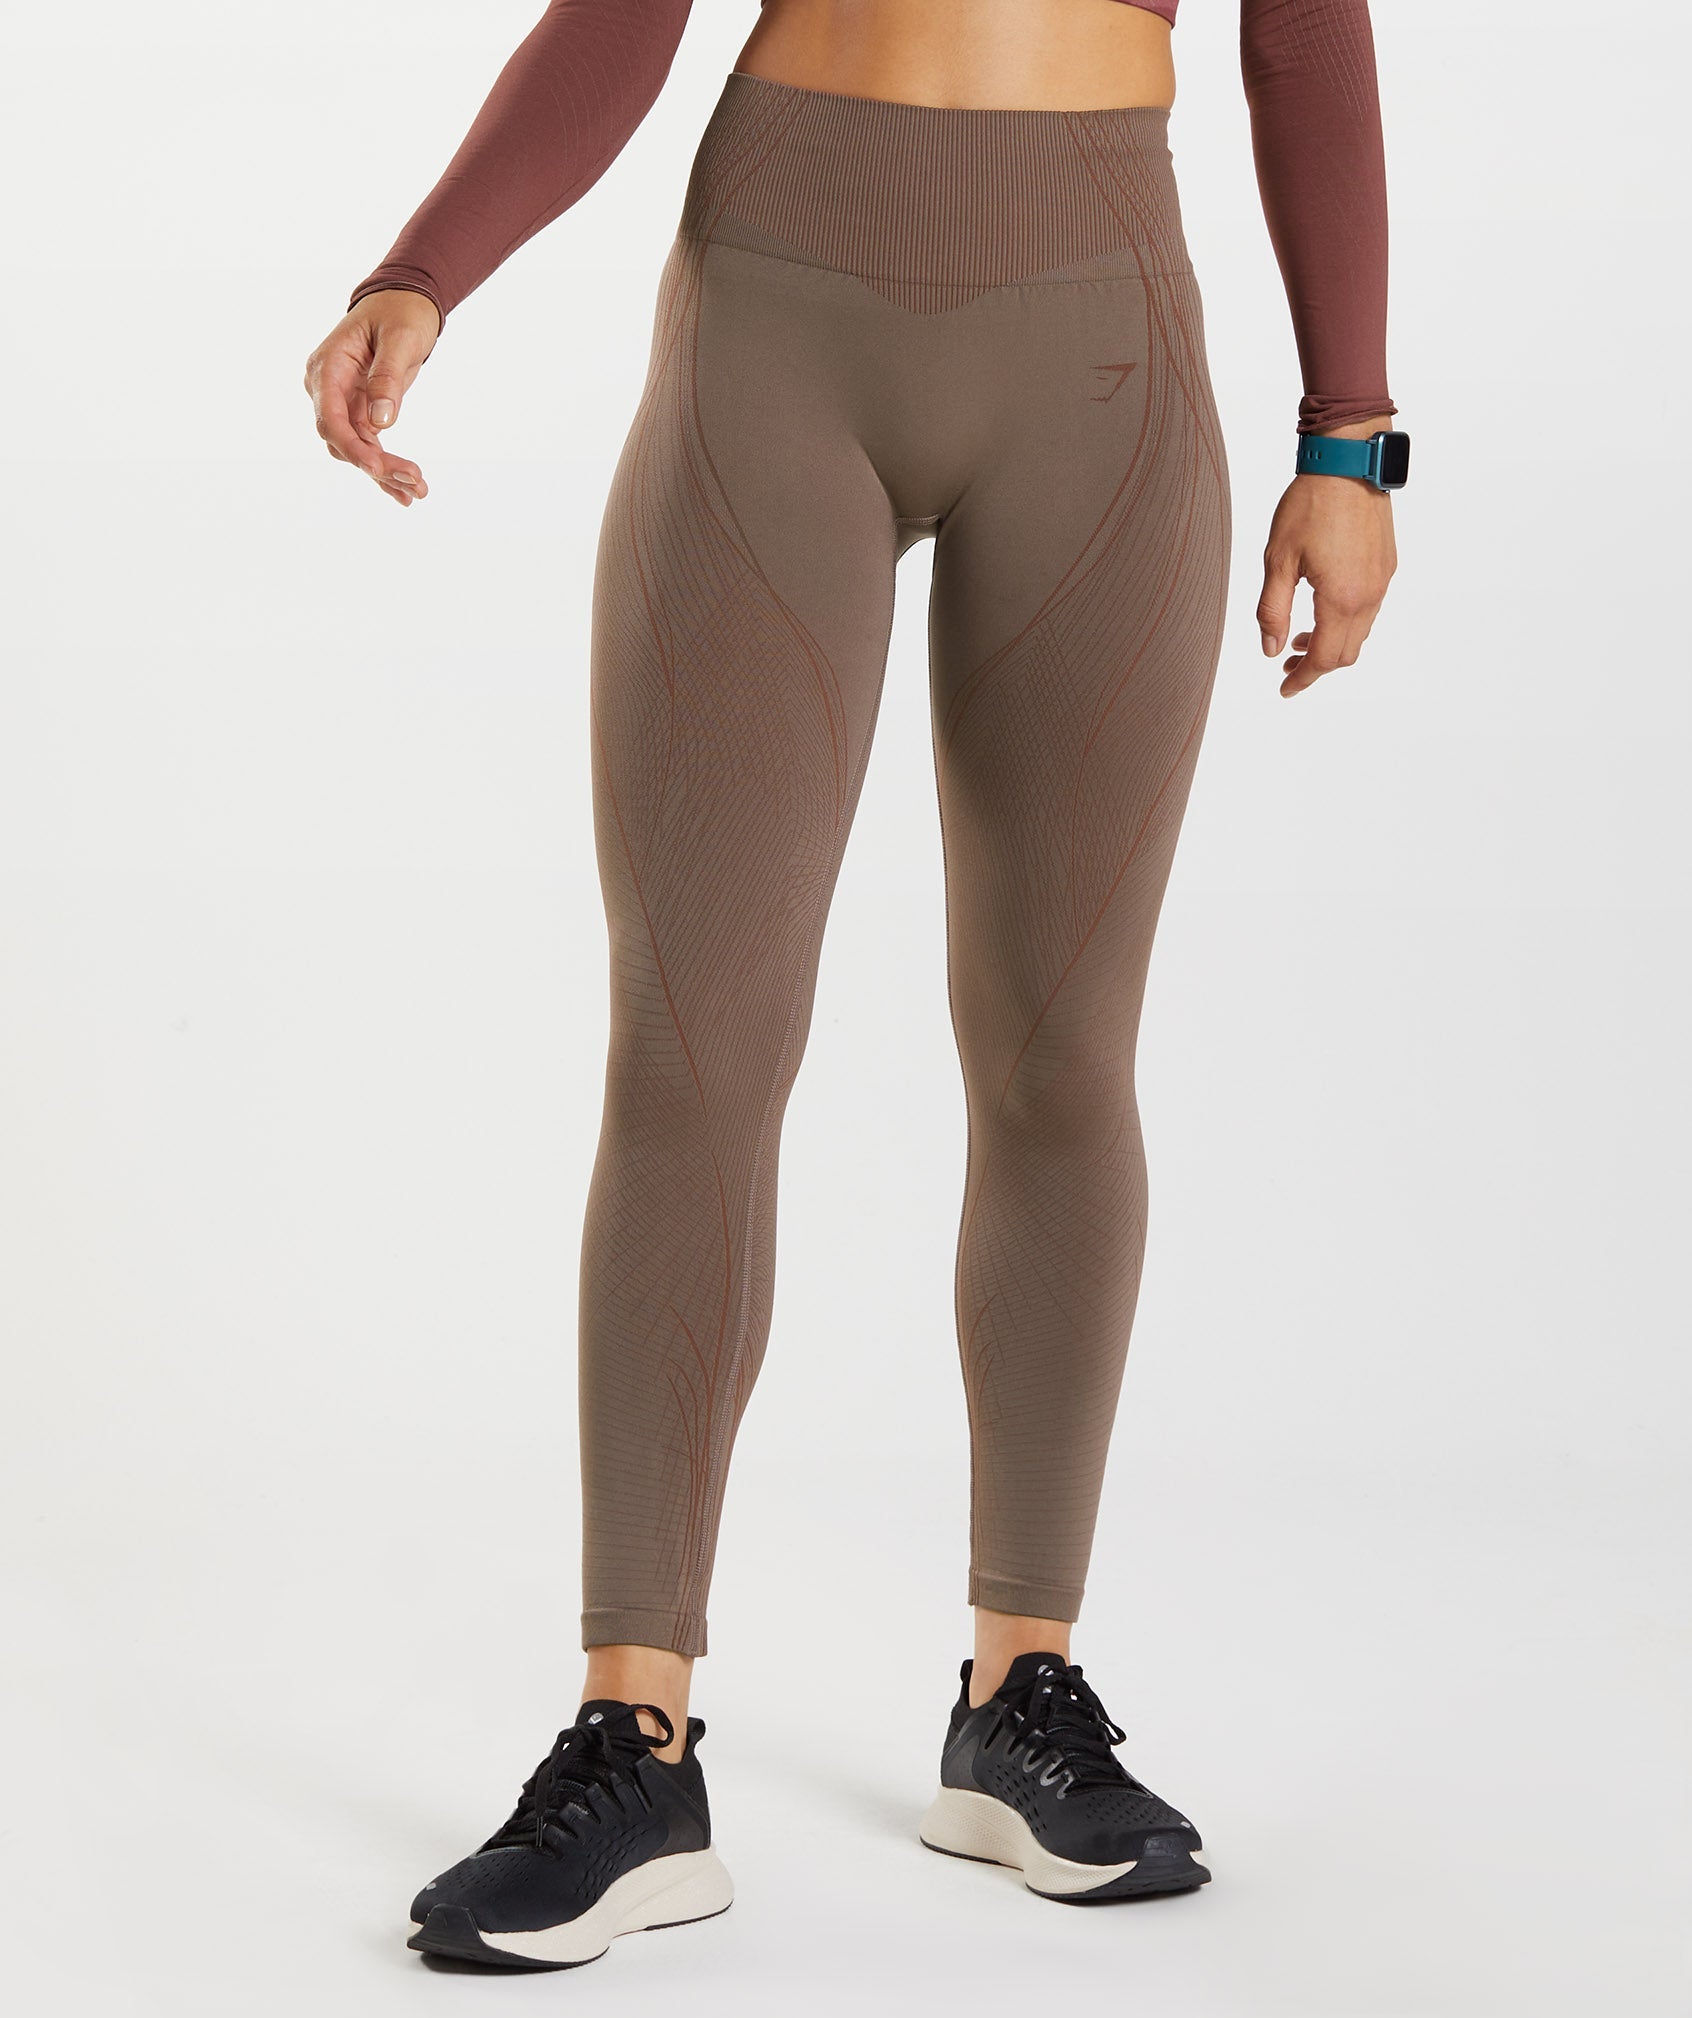 Gymshark Small(8-10)600/= ❗SOLD 🔥❗ High-waisted Seamless leggings